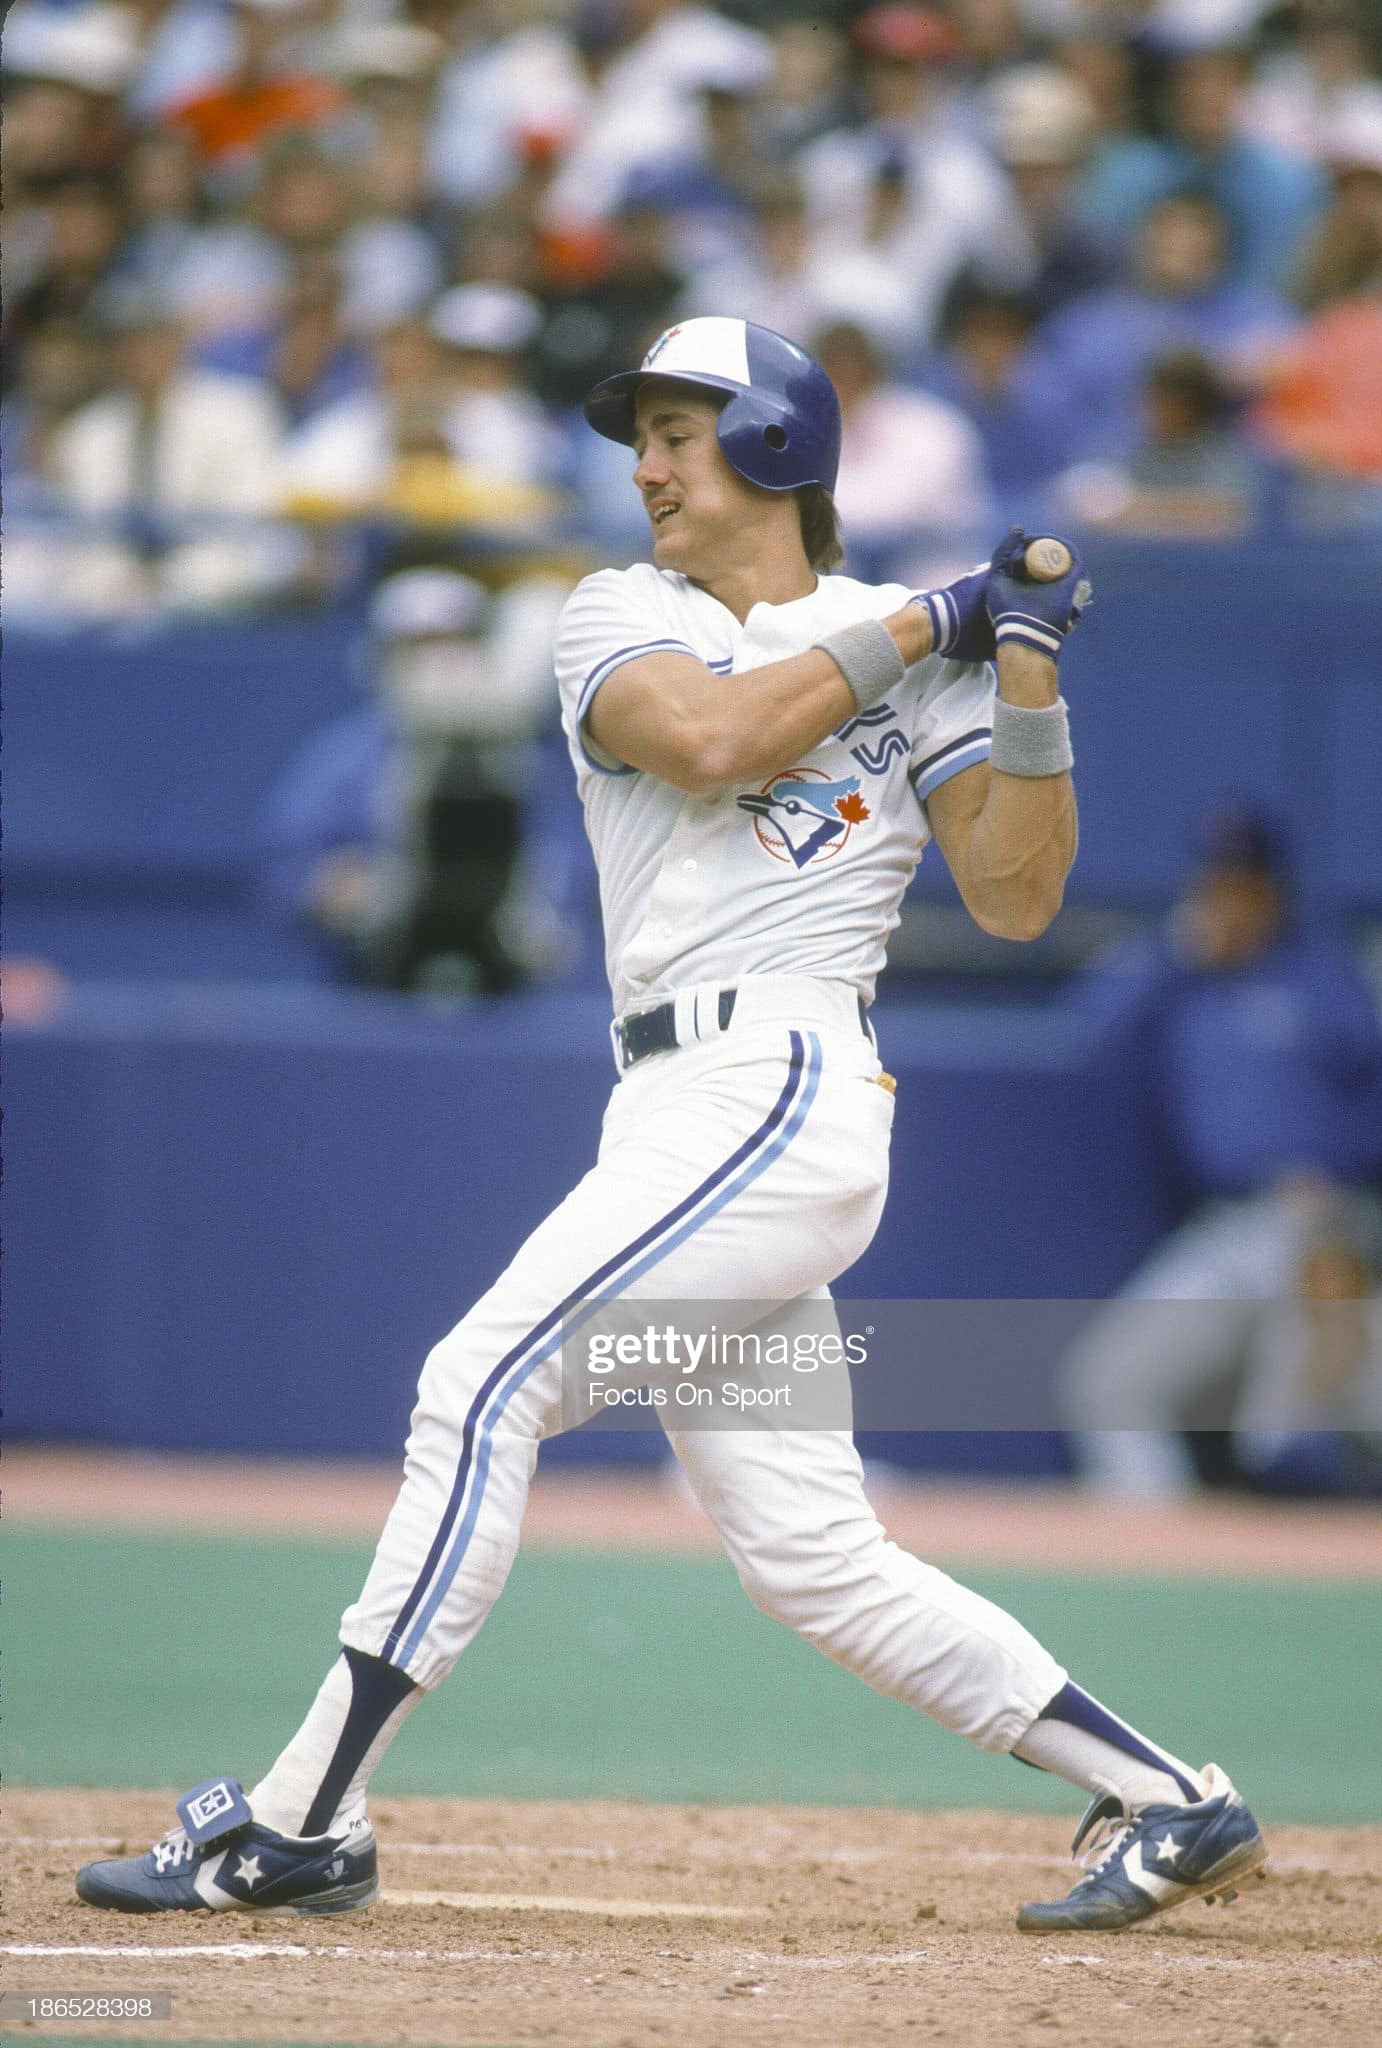 Former Toronto catcher Pat Borders at bat